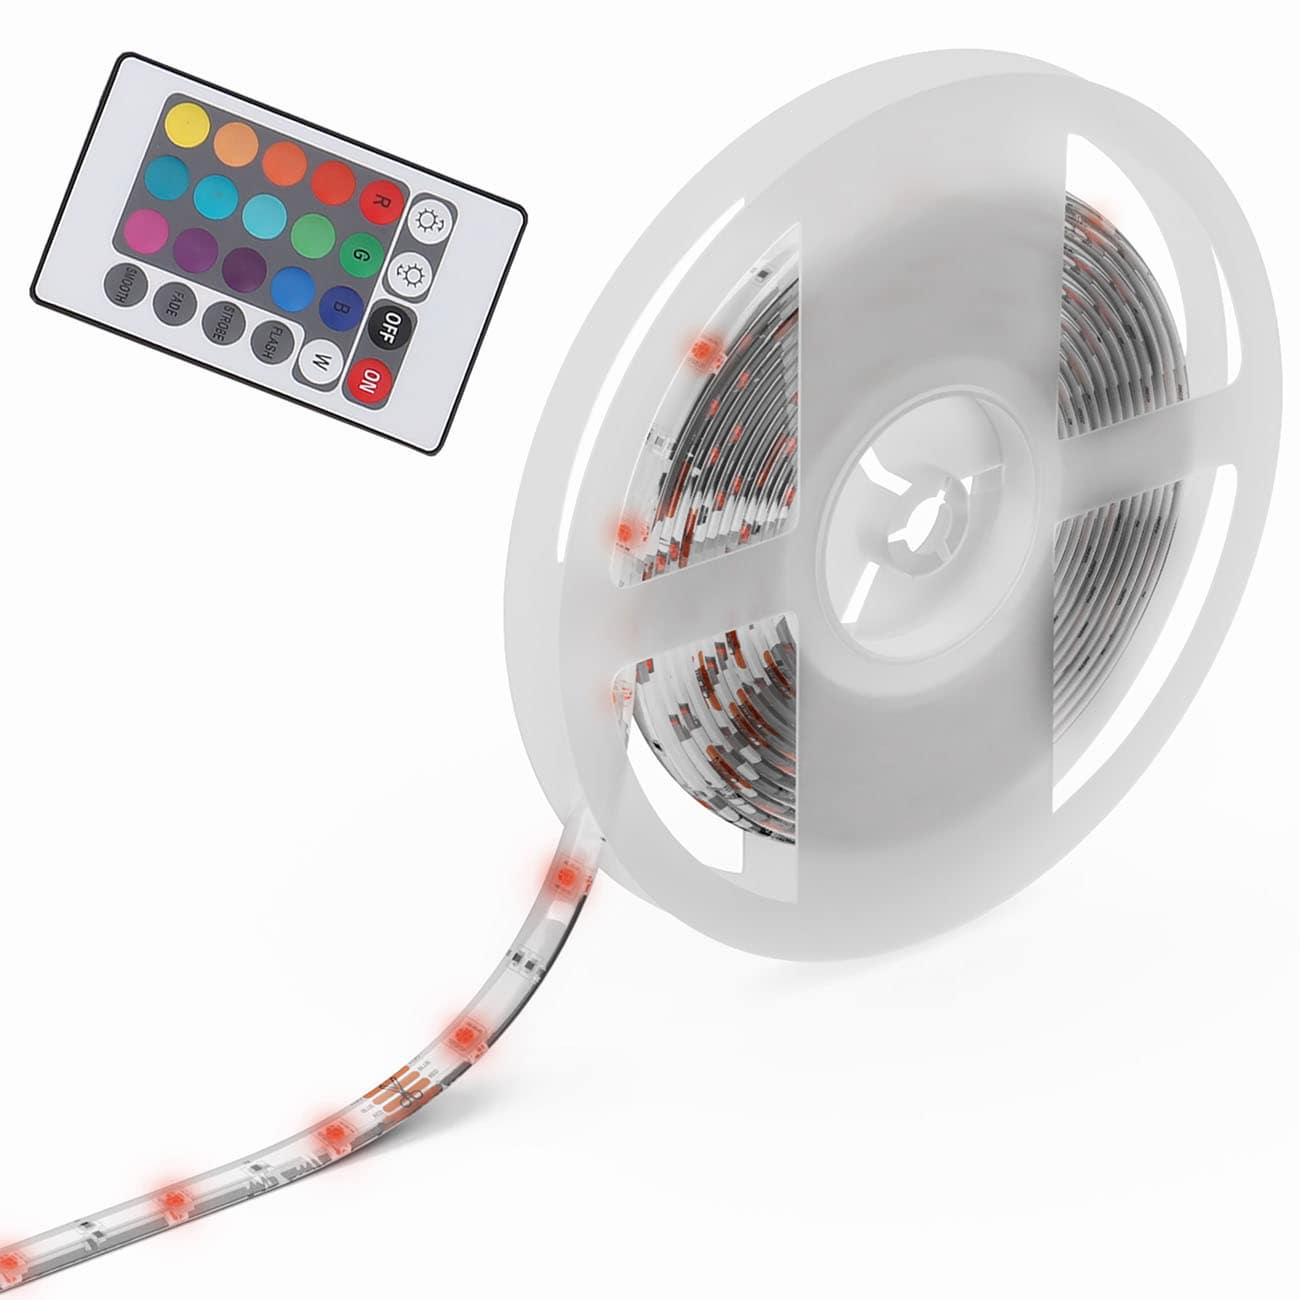 LED Licht-Band 230V - 5 Meter - RGB Stripe dimmbar 24W warmweiß inkl  Fernbedienung 150 LEDs flexibel kürzbar selbstklebend silikonbeschichtet |  weiß